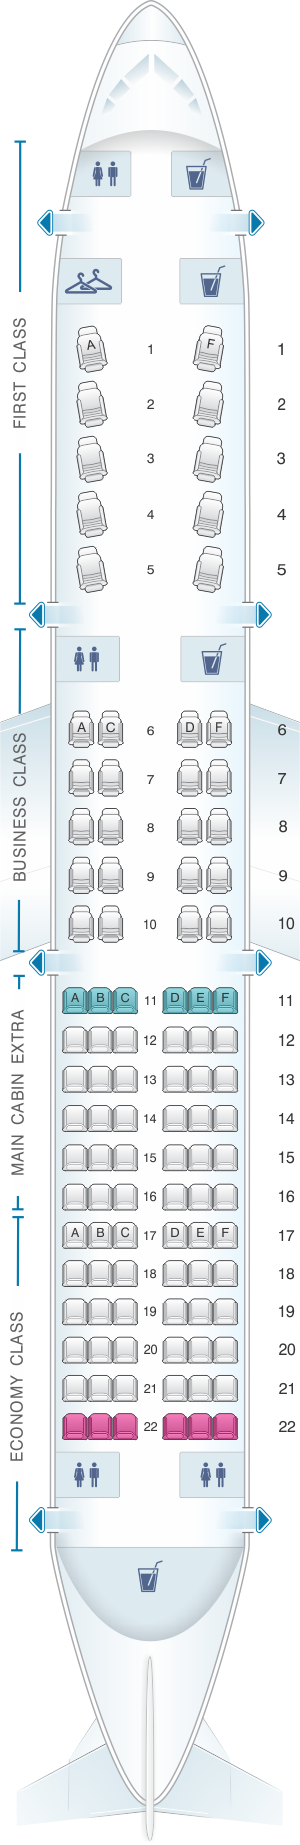 321 Seating Chart